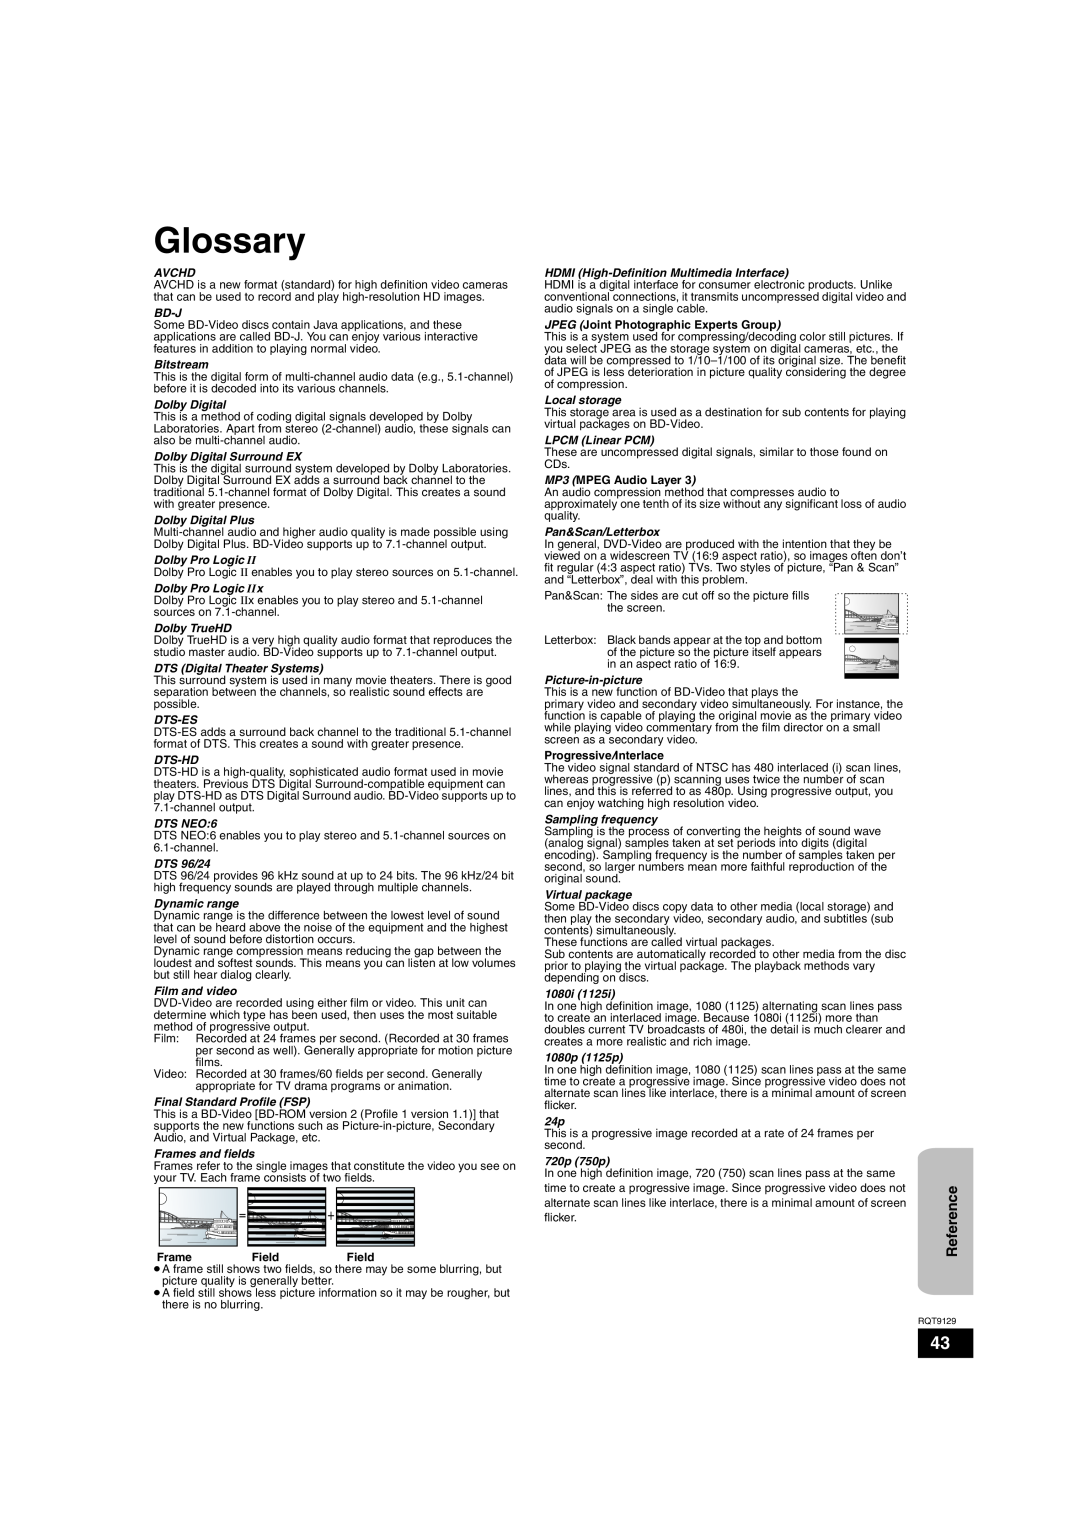 Panasonic SC-BT100 warranty Glossary, Frame FieldField, JPEG Joint Photographic Experts Group, MP3 MPEG Audio Layer 